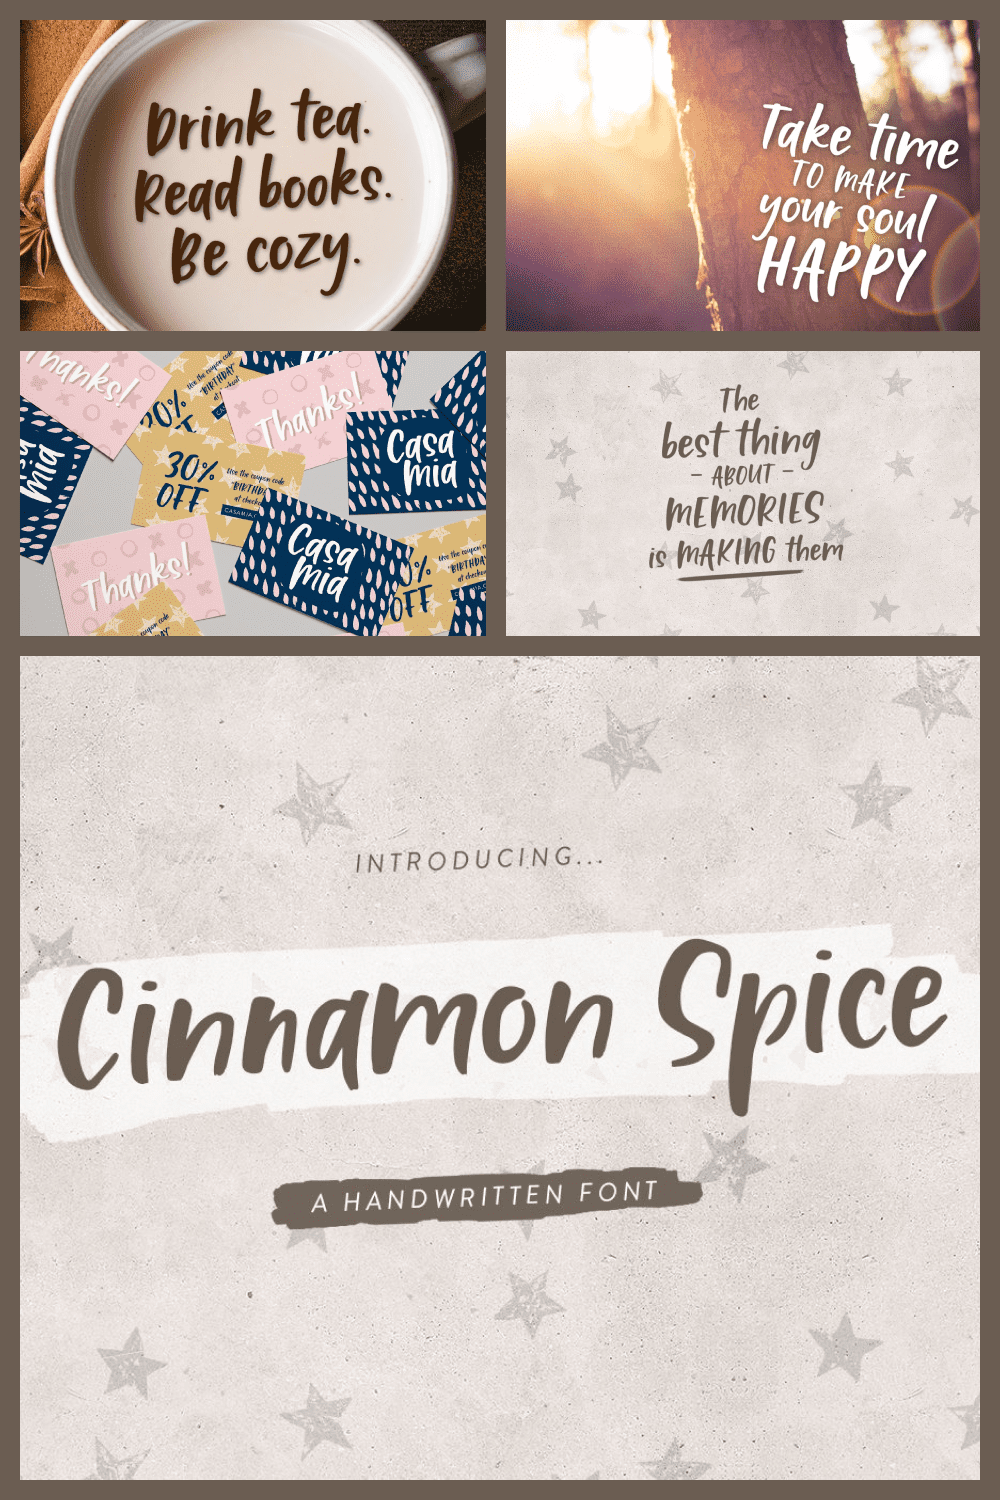 Cinnamon spice - handwritten font.